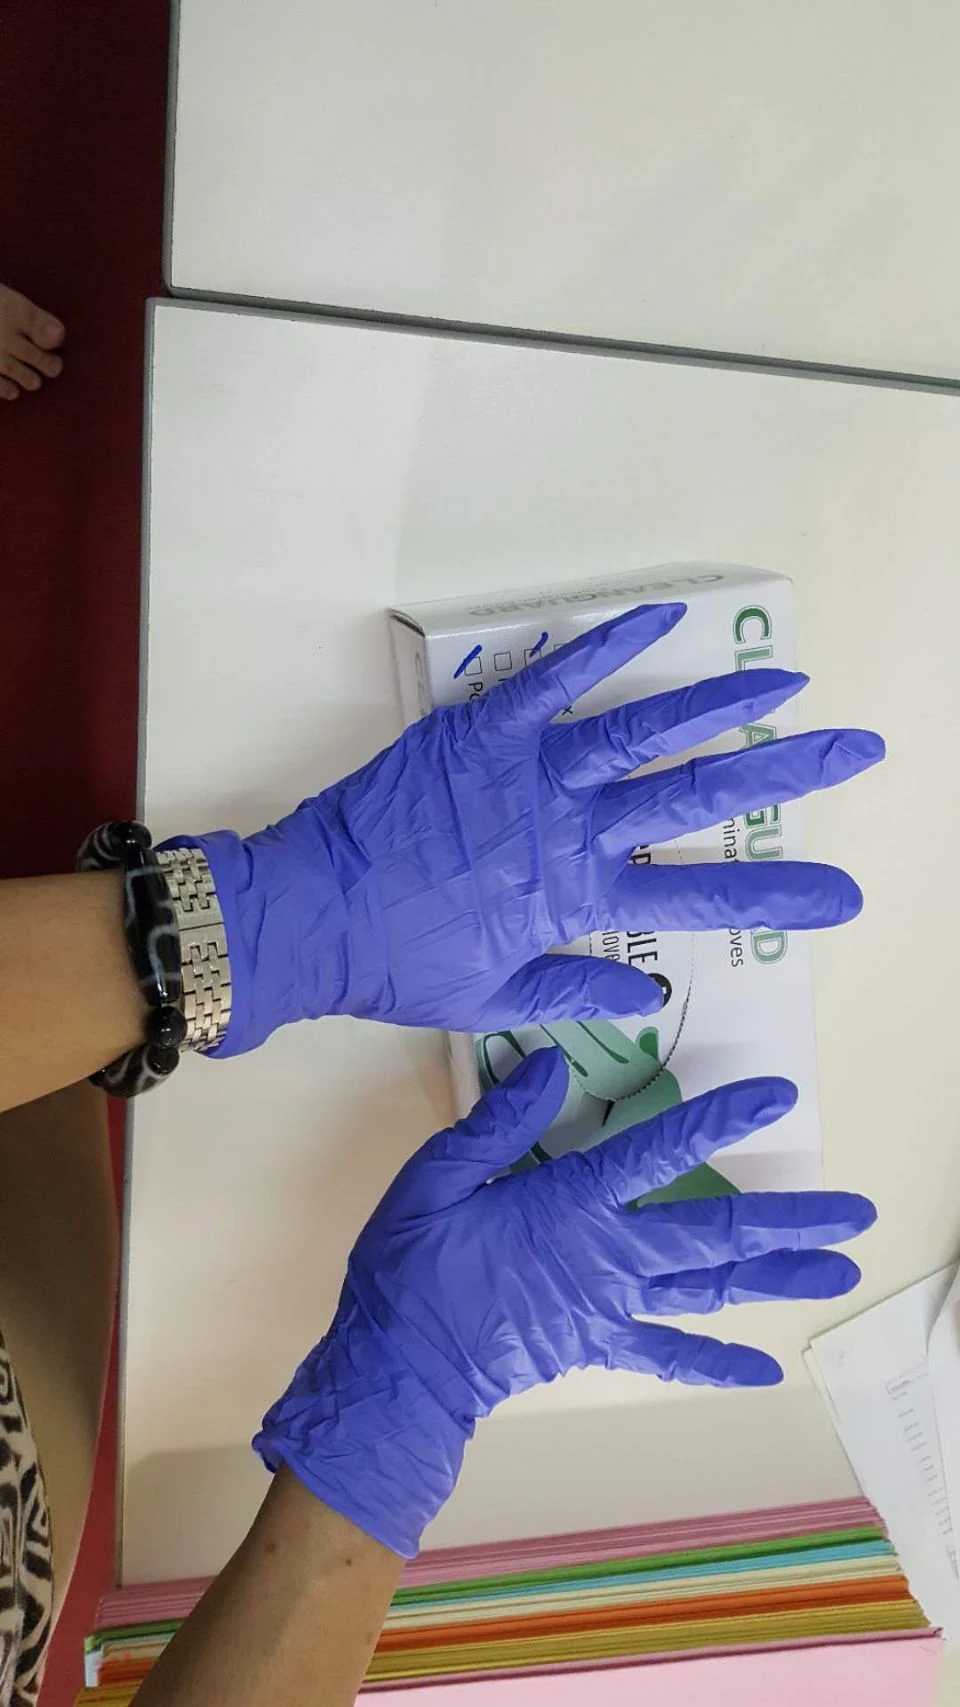 Safe Disposable Medical Nitrile Glove / Vinyl Latex Examination Medical Gloves